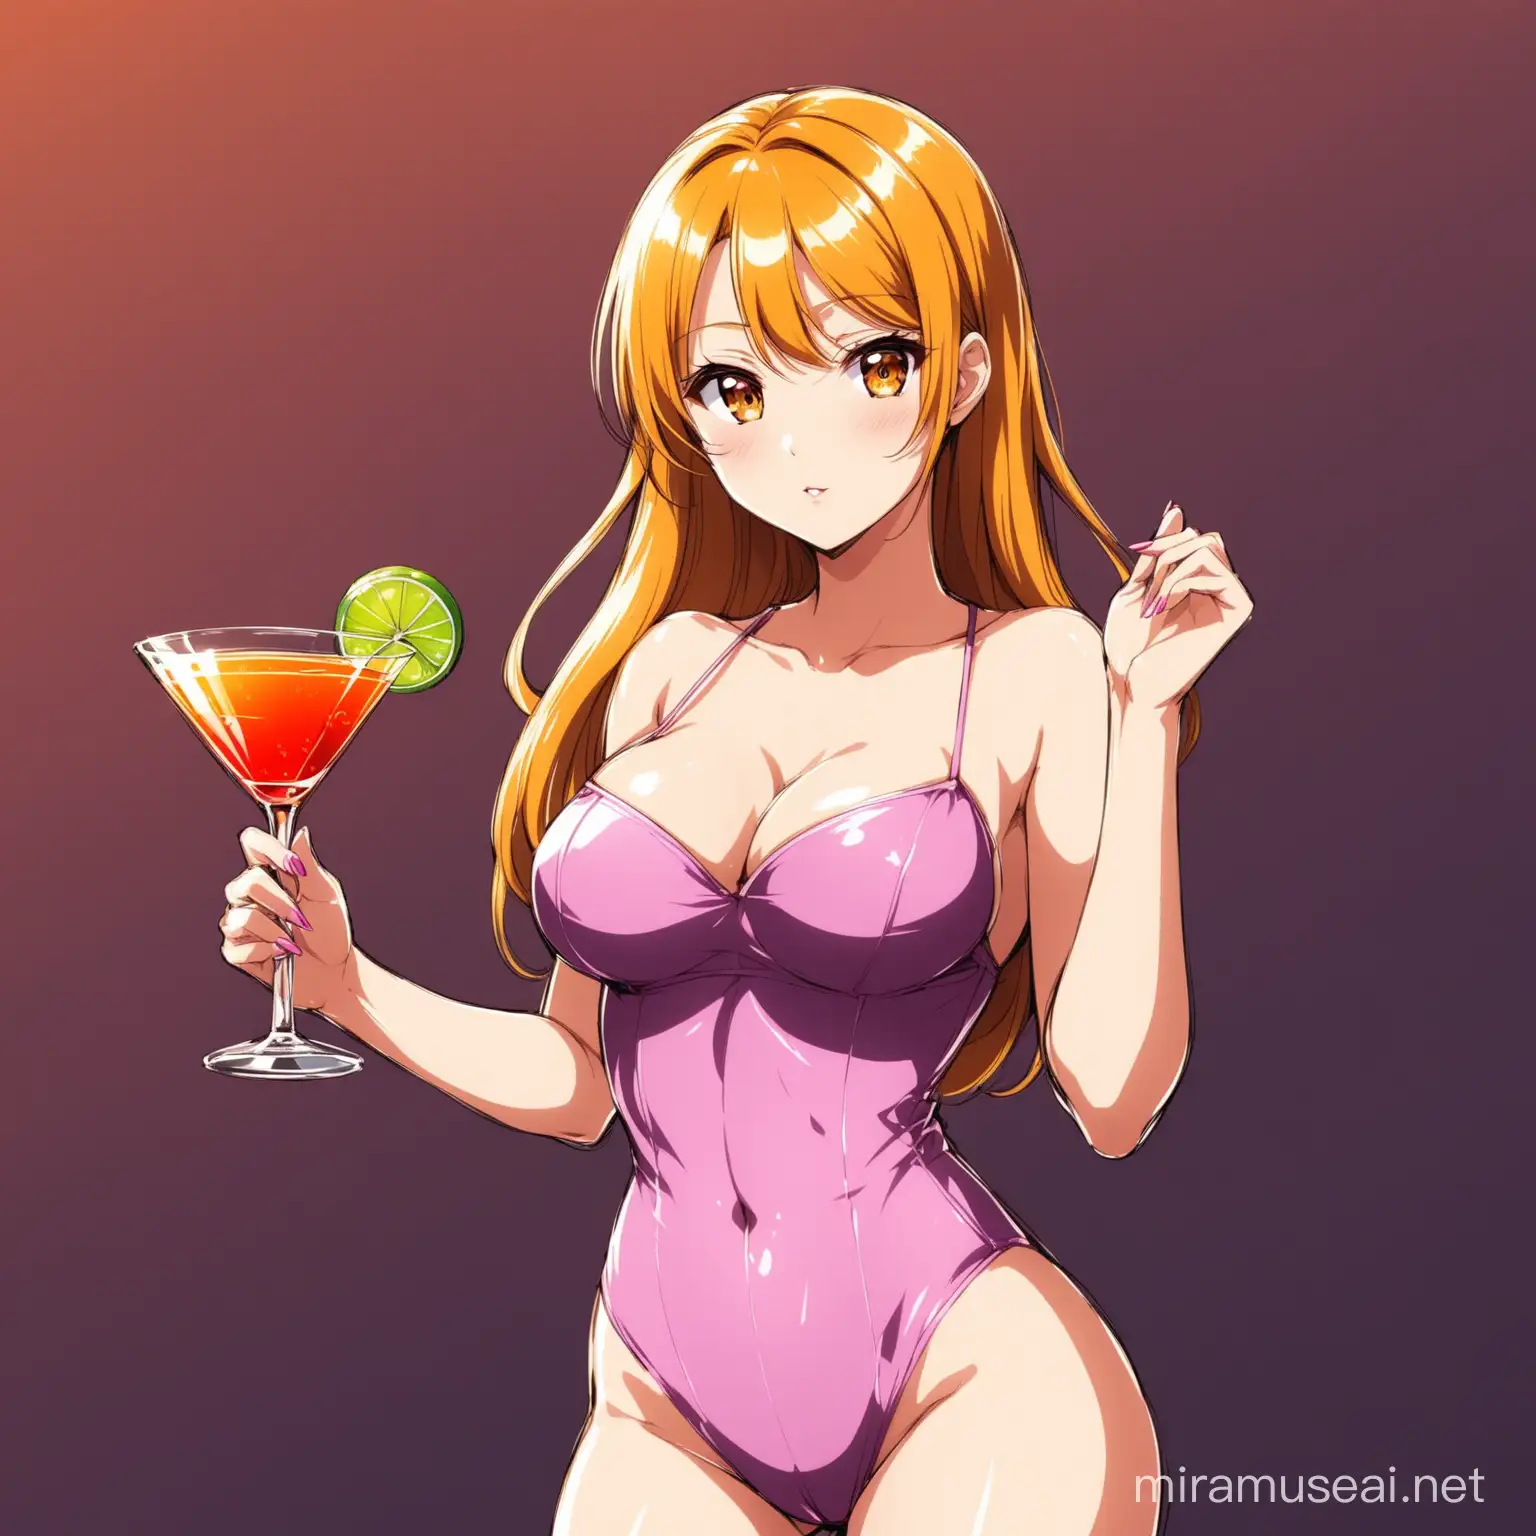 Elegant Anime Girl Enjoying a Cocktail